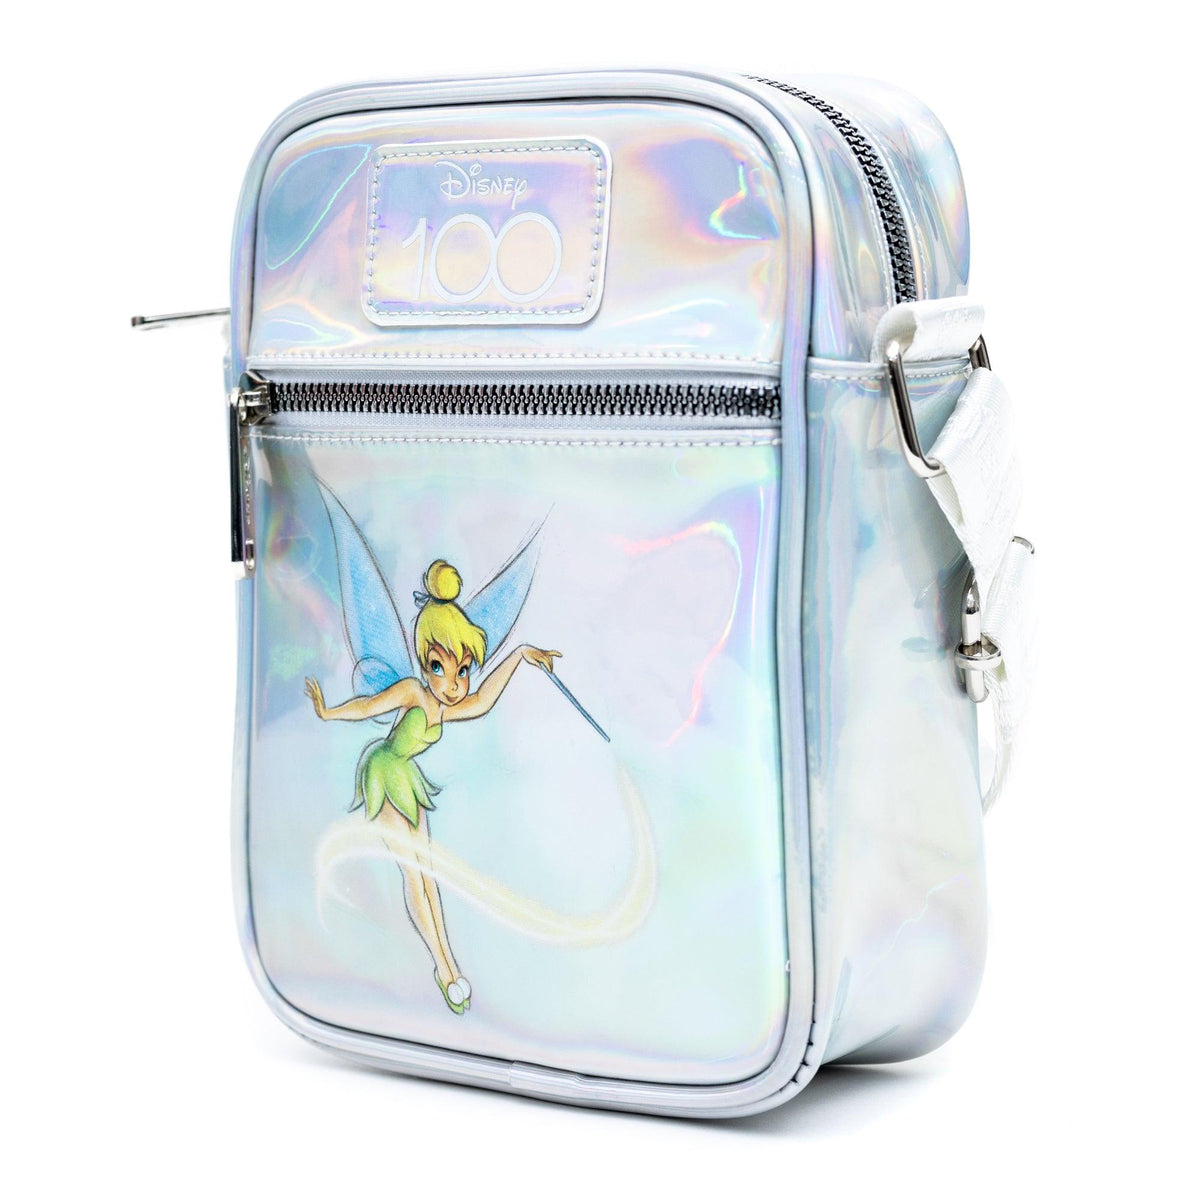 Disney Tinker Bell Iridescent Holographic Purse Left Side of Bag